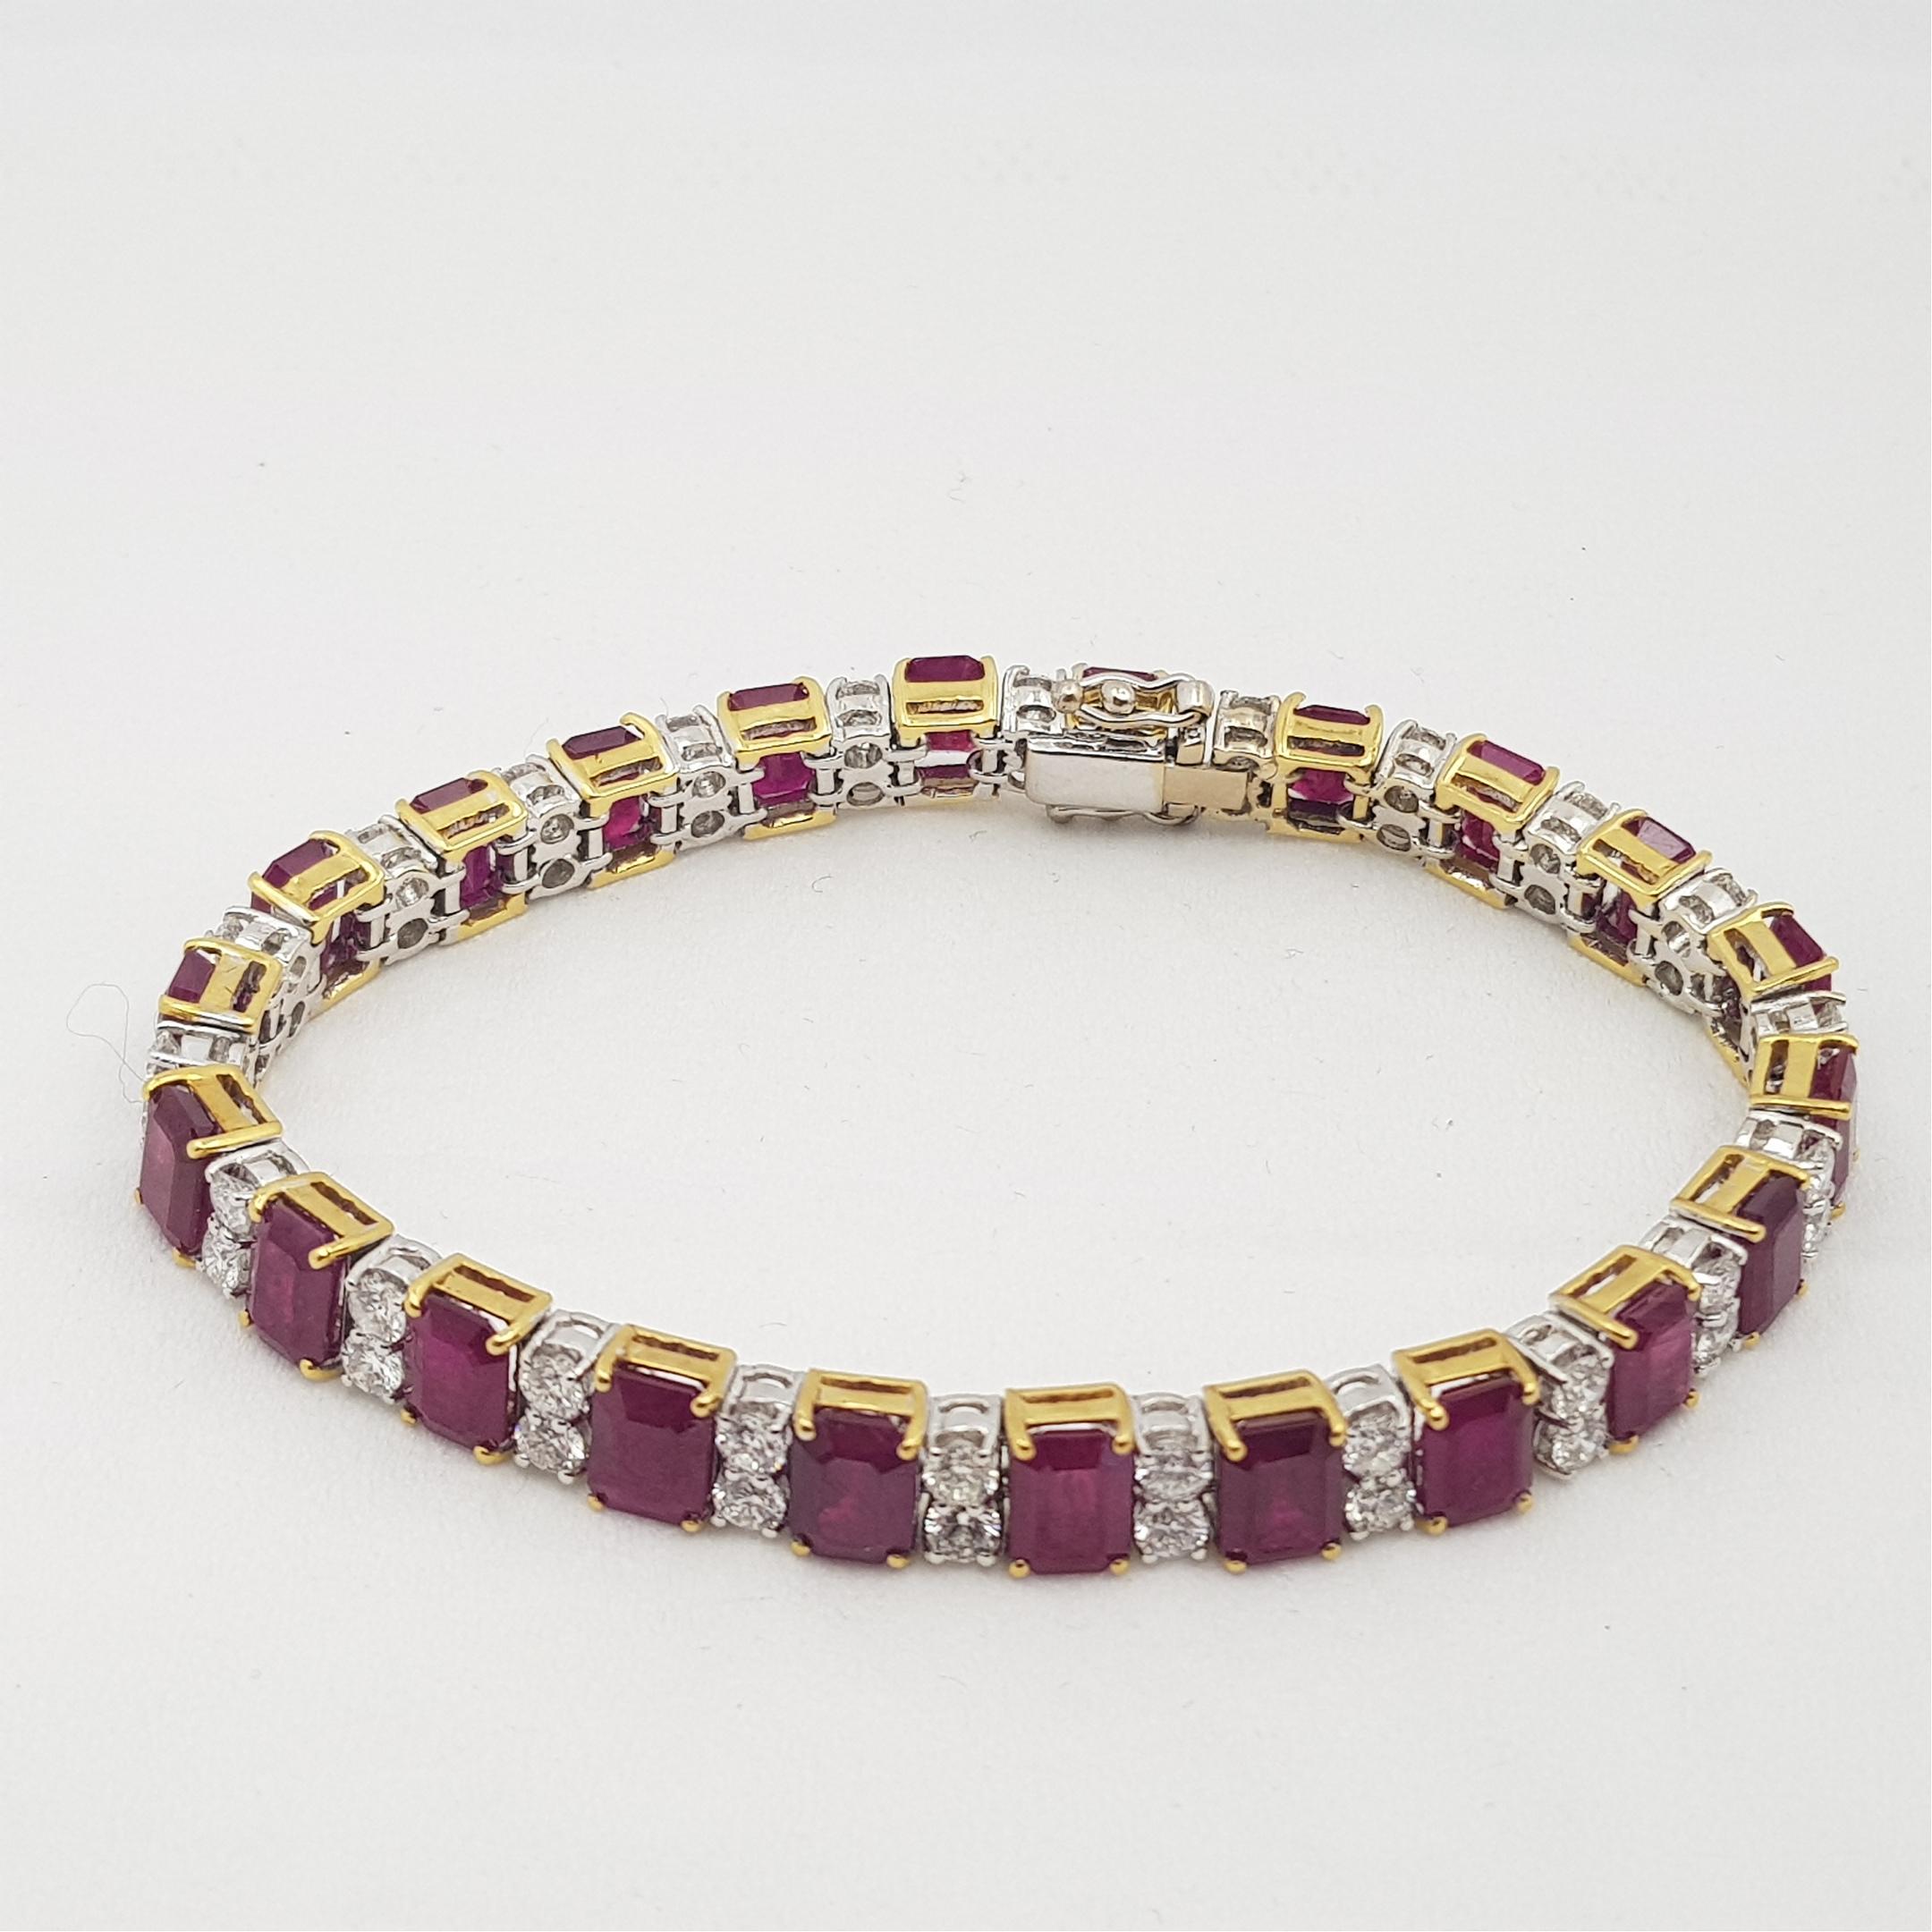 Women's 18ct Two Tone Gold Burmese Ruby & 4.5ct TW Diamond Bracelet Val $62765 AUD For Sale